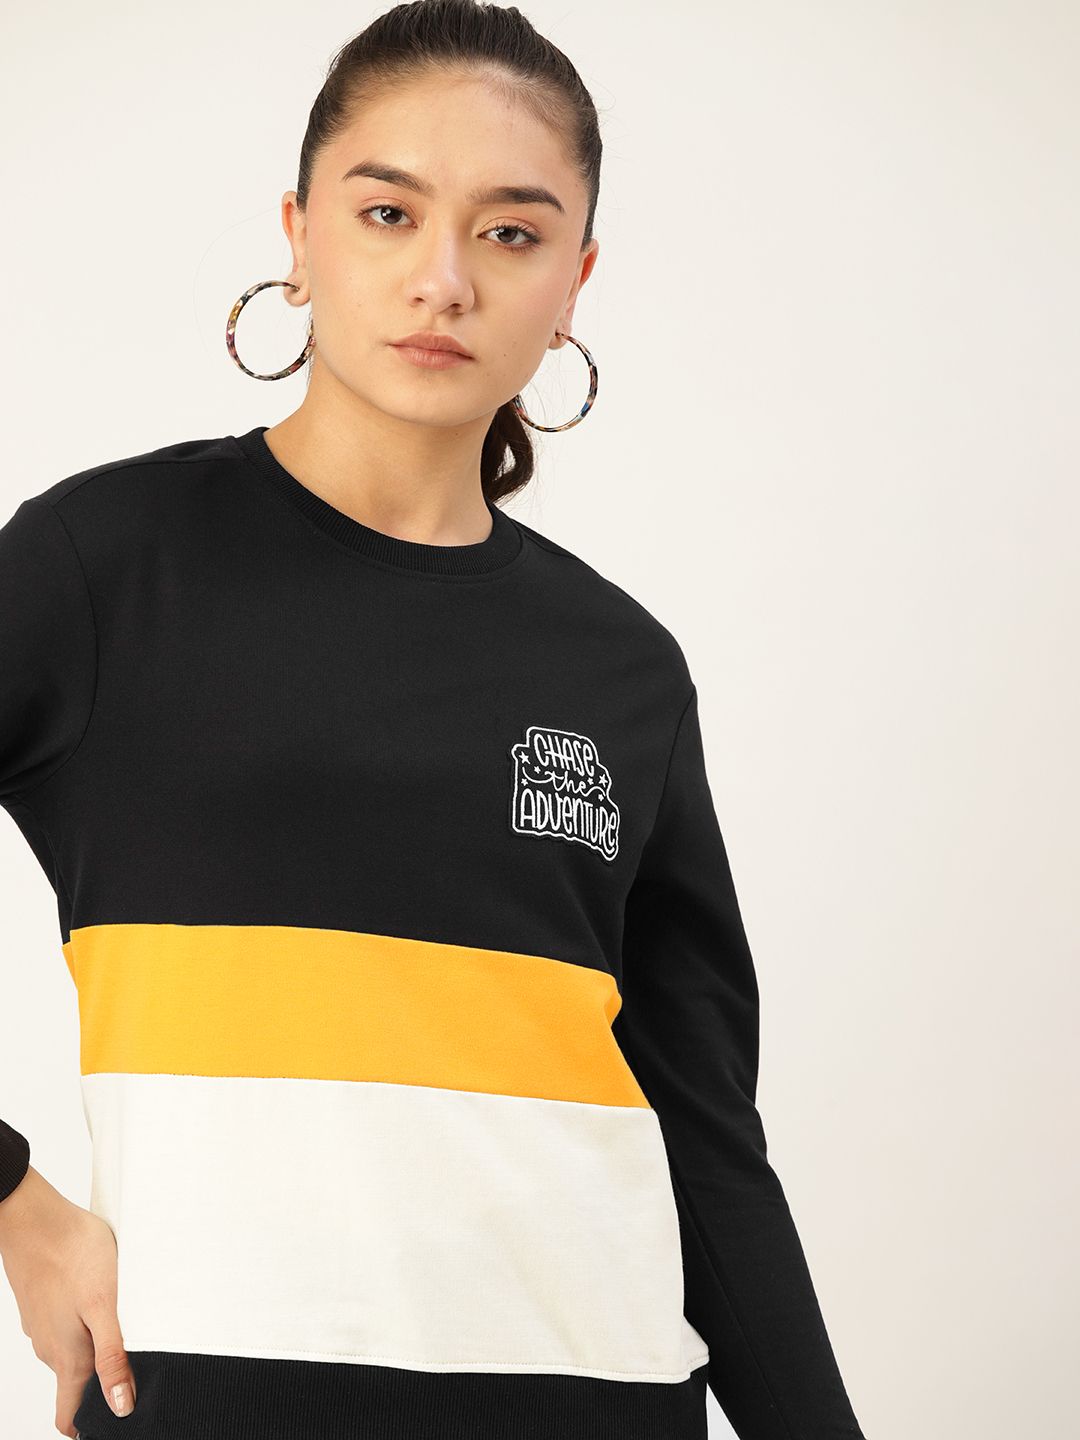 DressBerry Women Black & White Colourblocked Sweatshirt Price in India